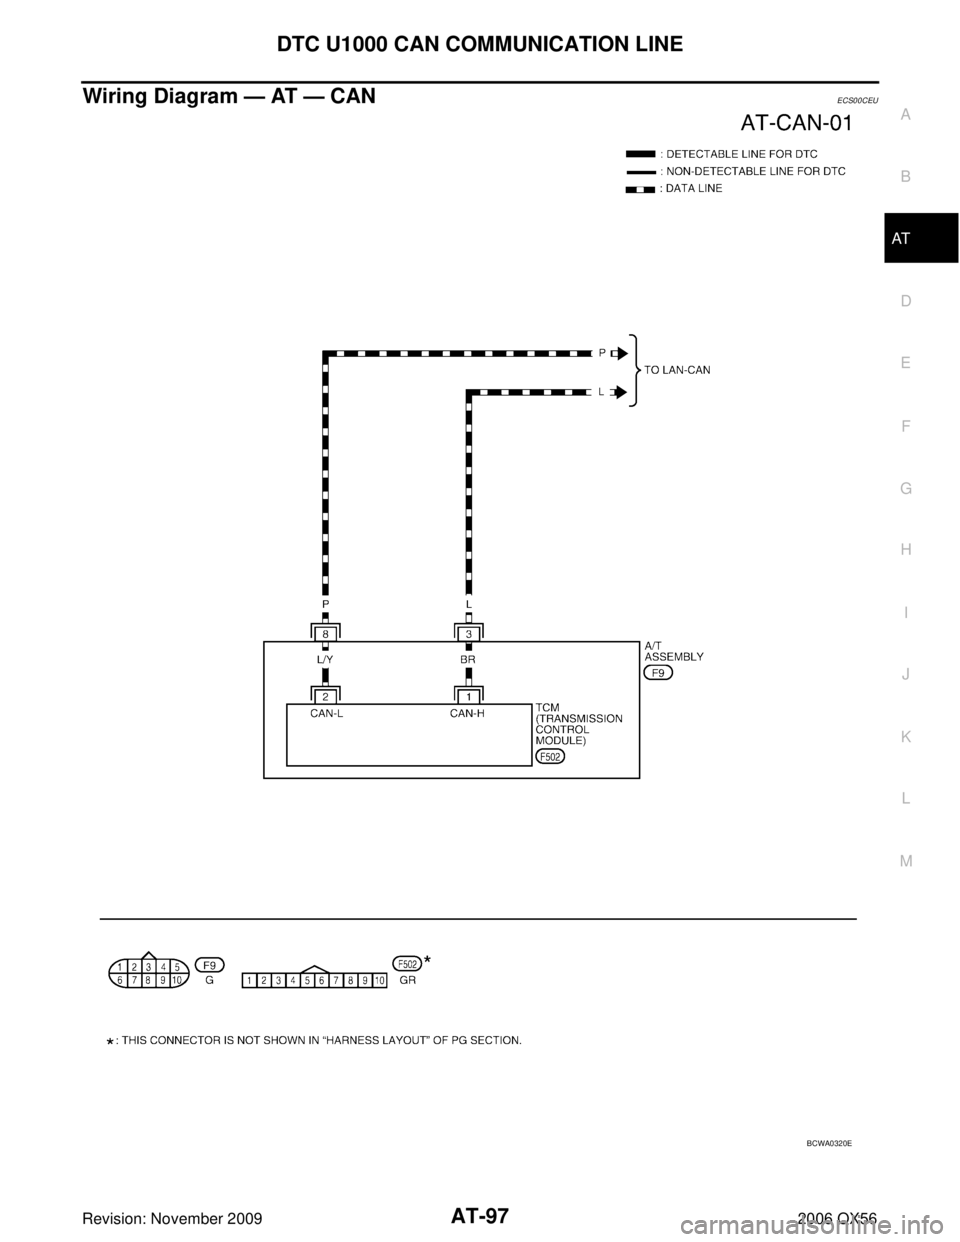 INFINITI QX56 2006  Factory Service Manual DTC U1000 CAN COMMUNICATION LINEAT-97
DE
F
G H
I
J
K L
M A
B
AT
Revision: November 2009 2006 QX56
Wiring Diagram — AT — CANECS00CEU
BCWA0320E 